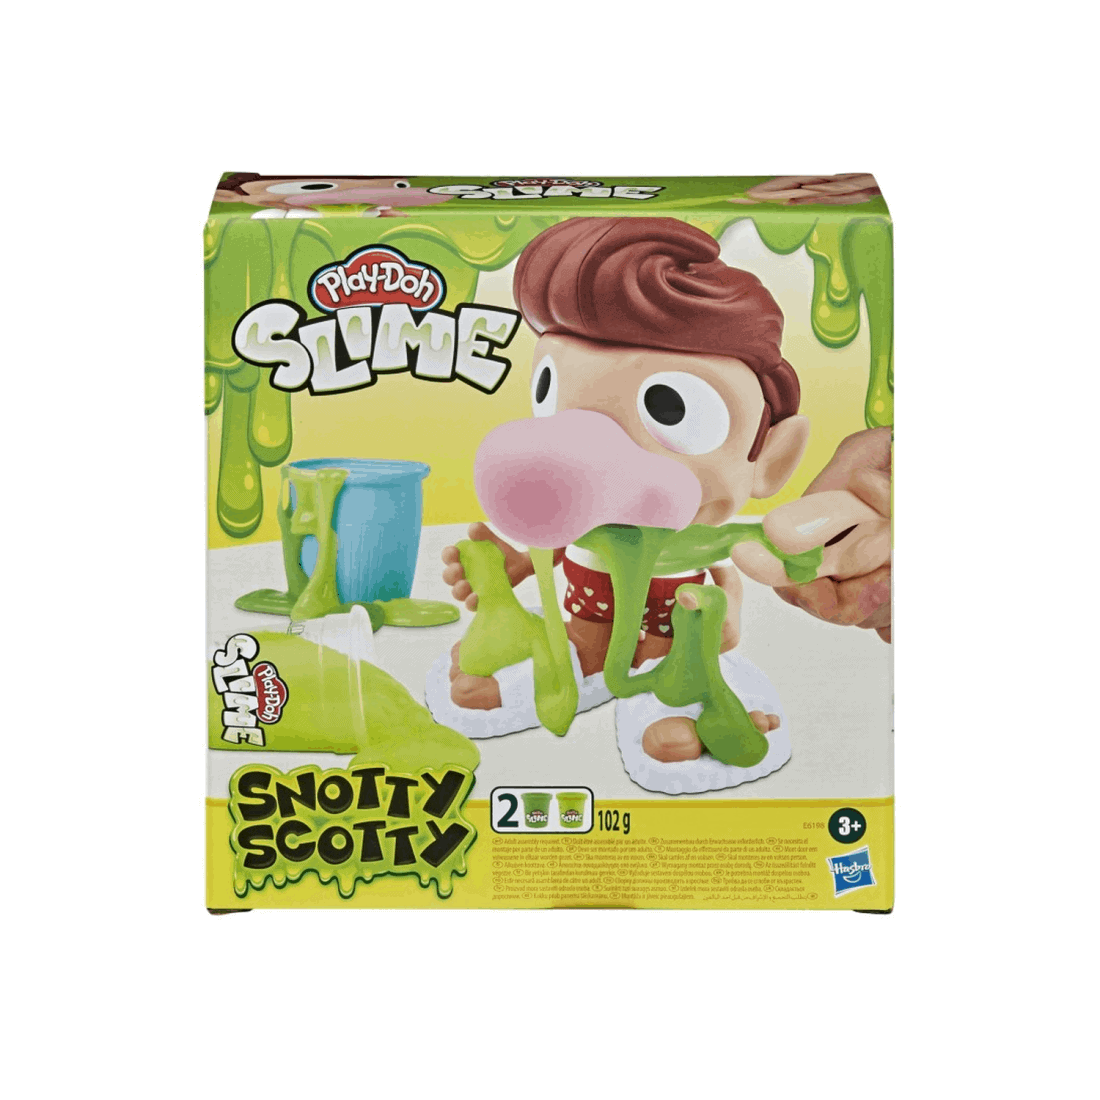 PlayDoh - Slime Snotty Scotty